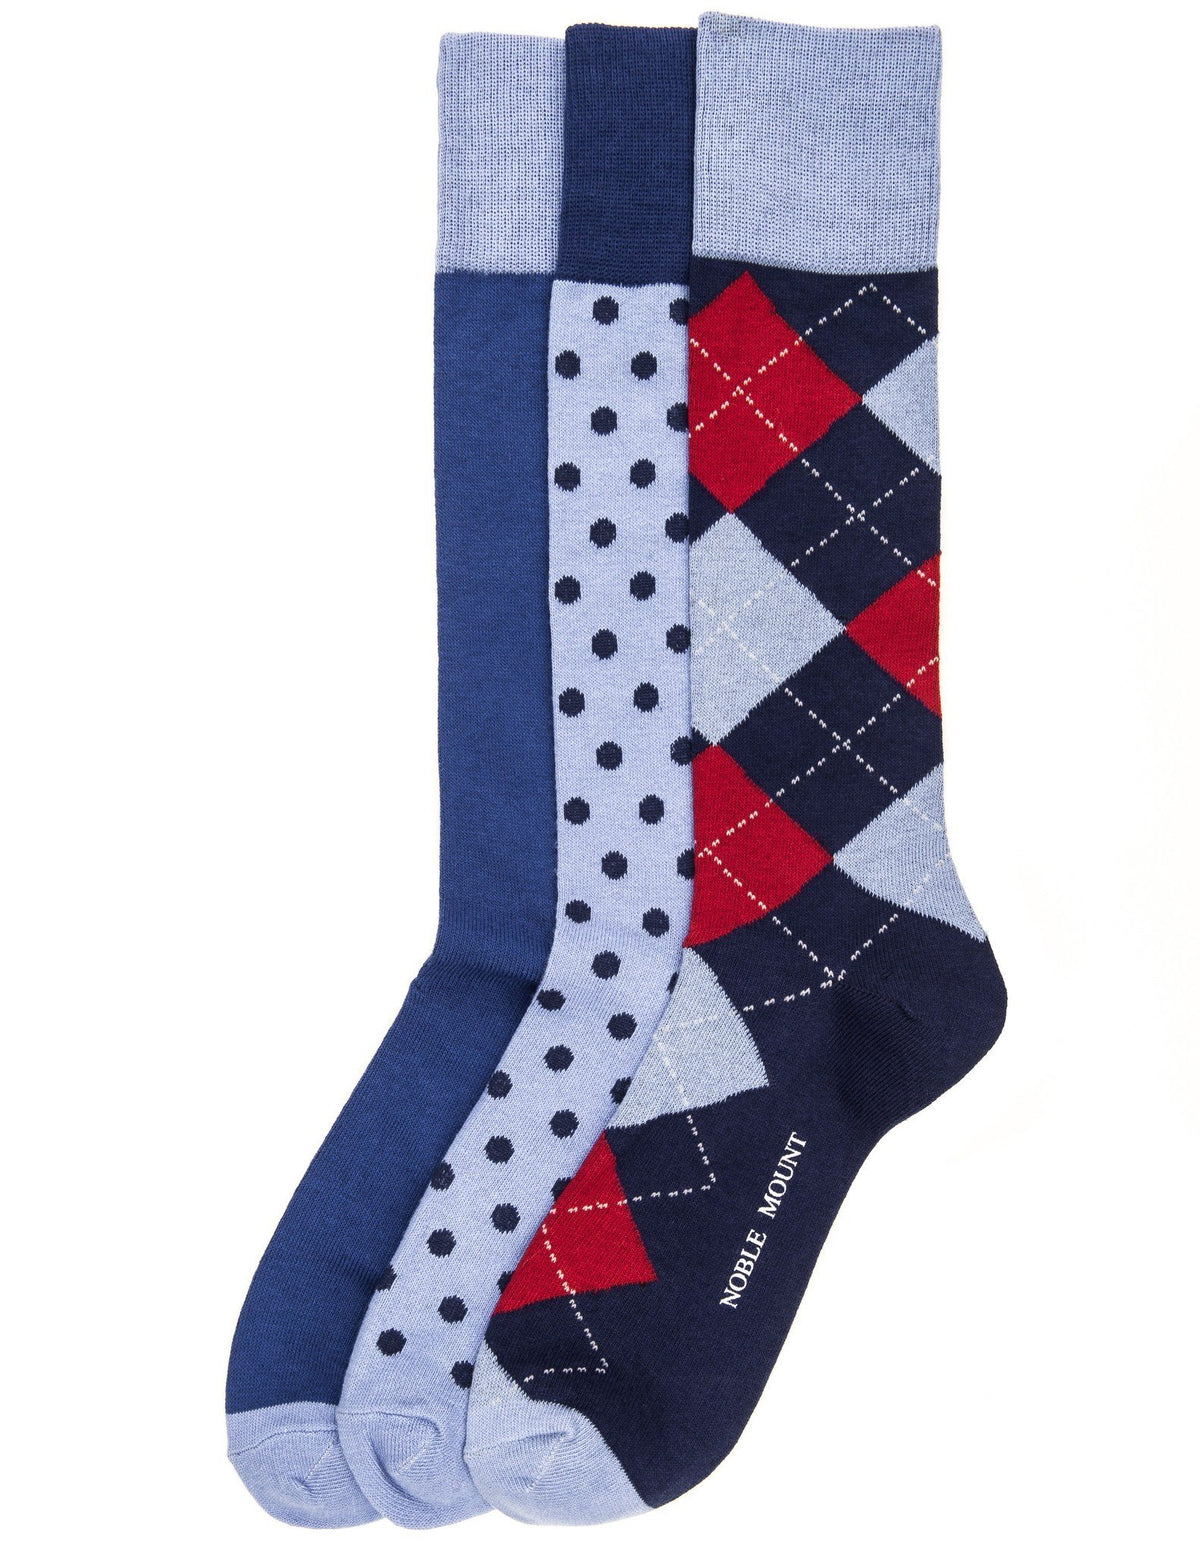 Men's Combed Cotton Dress Socks 3-Pack - Set B3